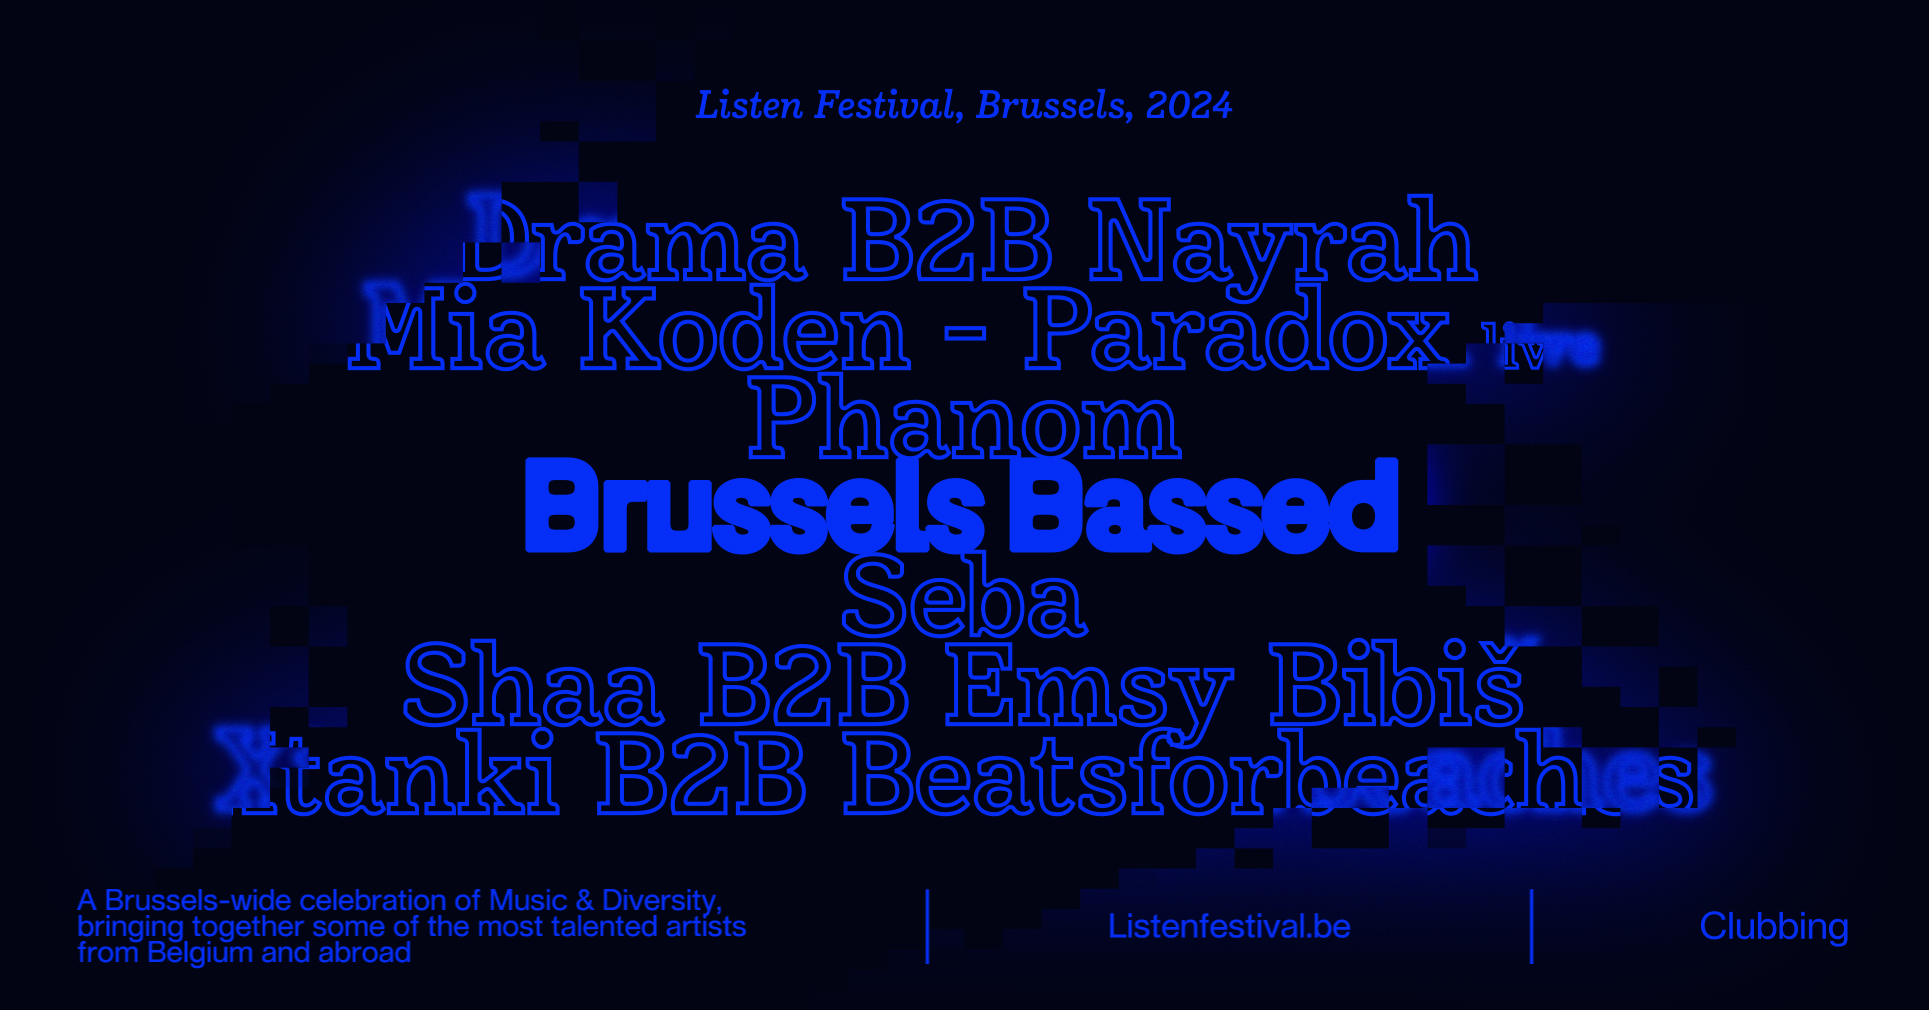 Listen x Brussels Bassed